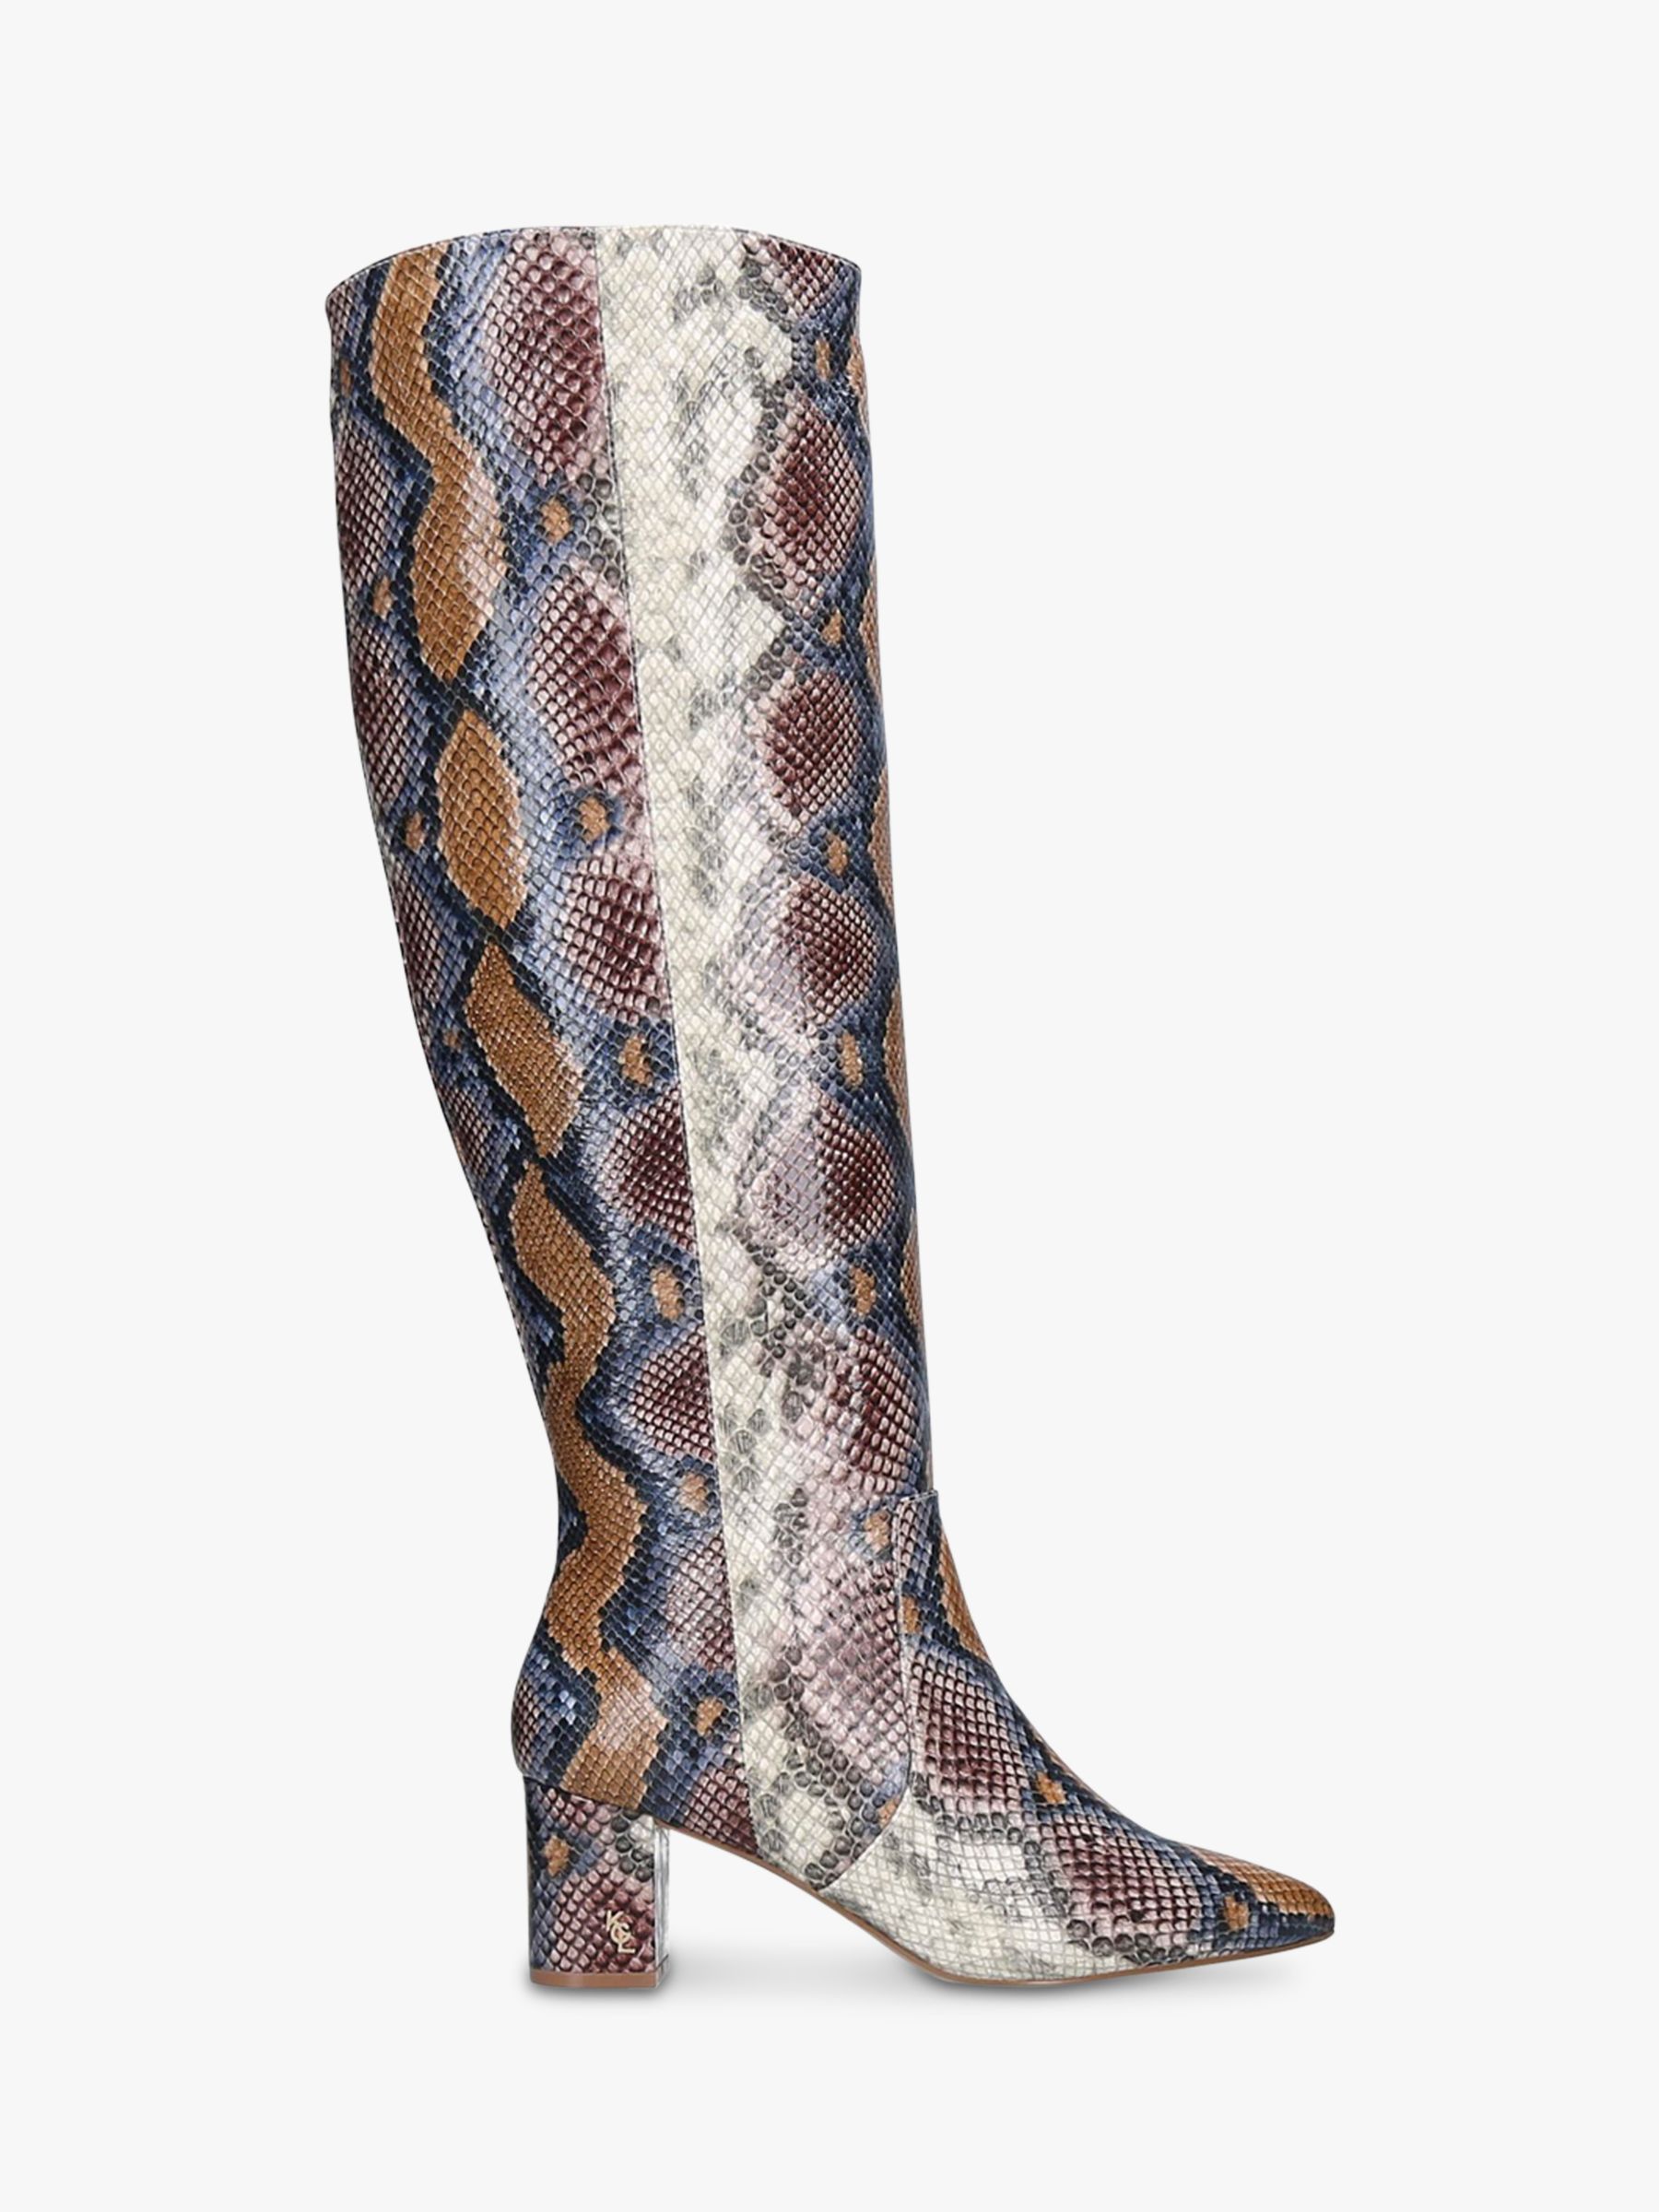 Kurt Geiger London Briya Snake Print Block Heel Knee High Boots